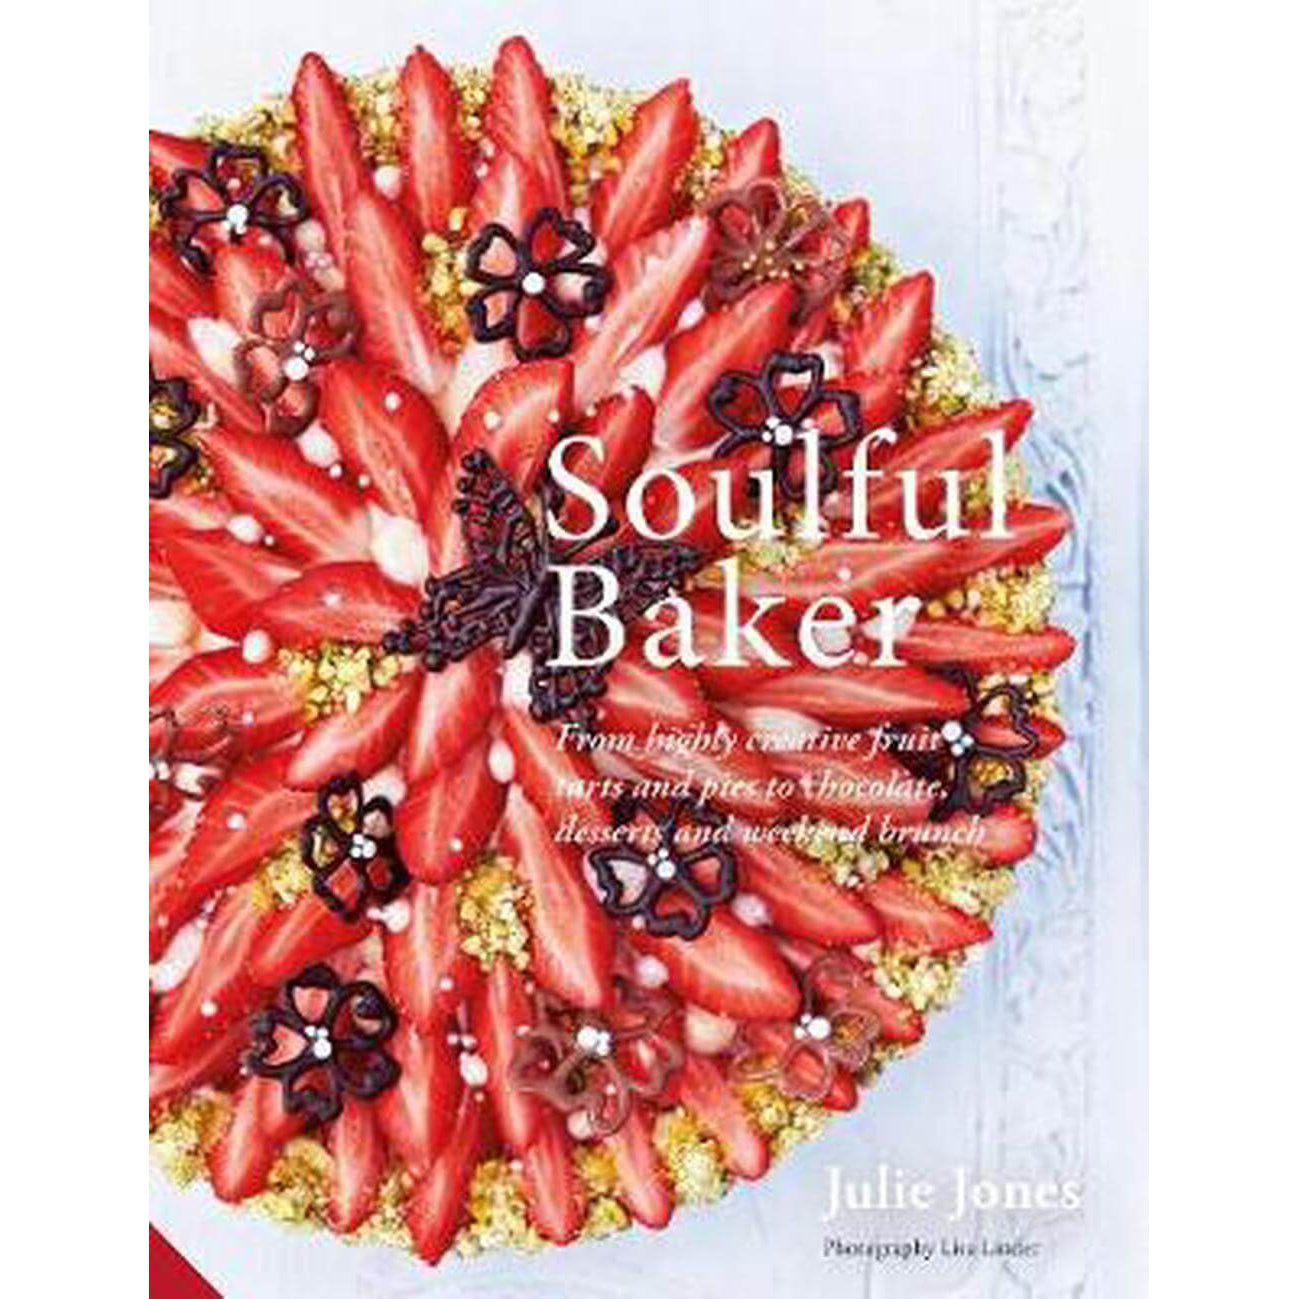 Julie Jones: The Soulful Baker